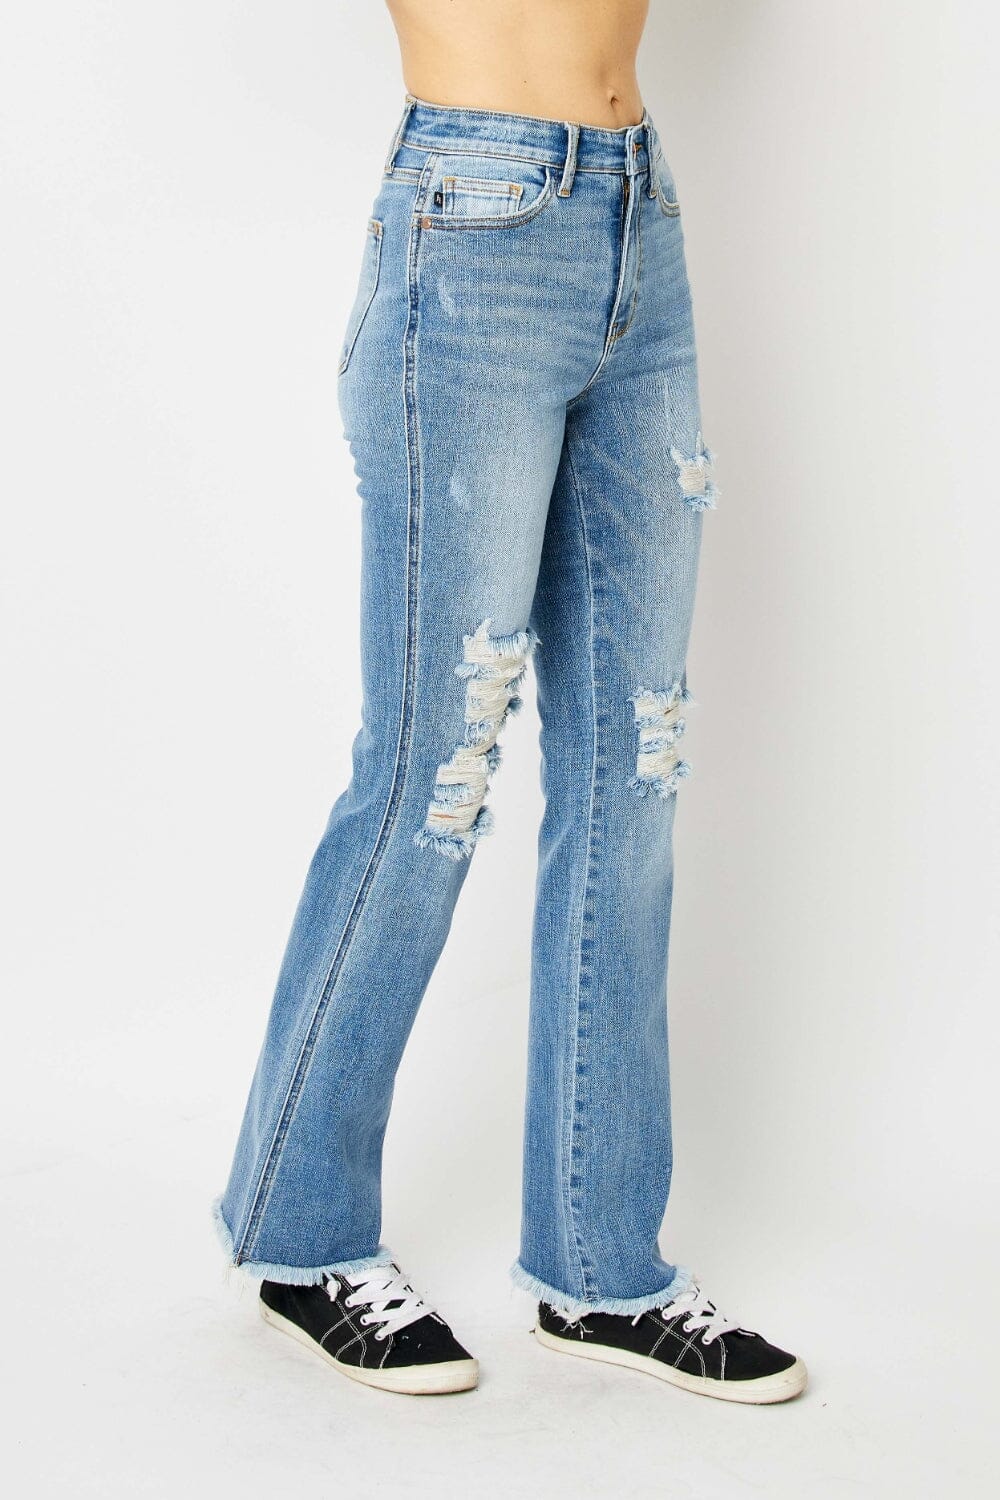 Judy Blue Medium Blue Distressed Raw Hem Bootcut Jeans jeans jehouze 